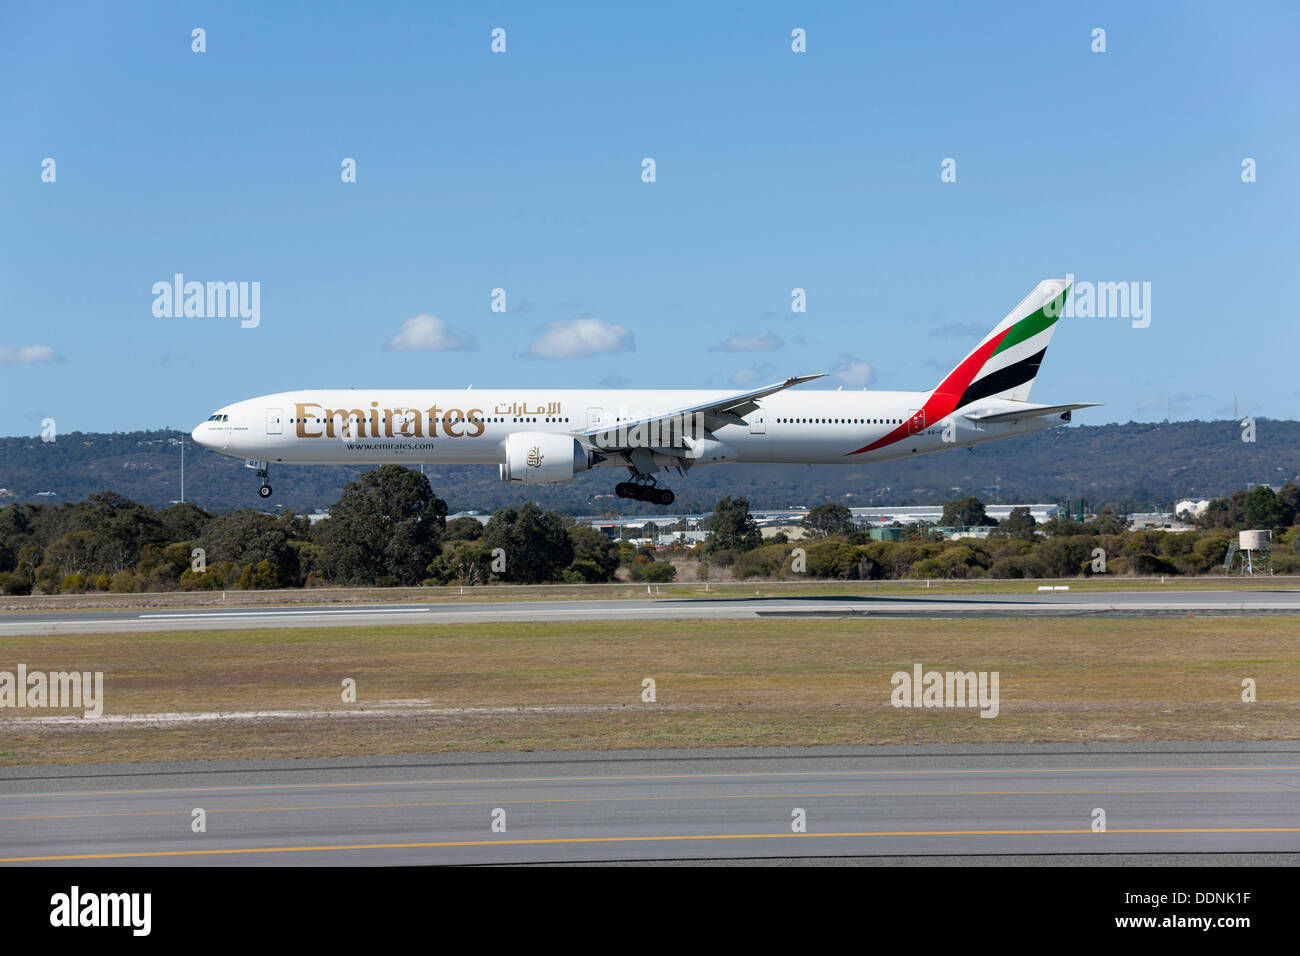 Emirates Boeing 777-300 aircraft landing at Perth Airport, Western Australia Stock Photo